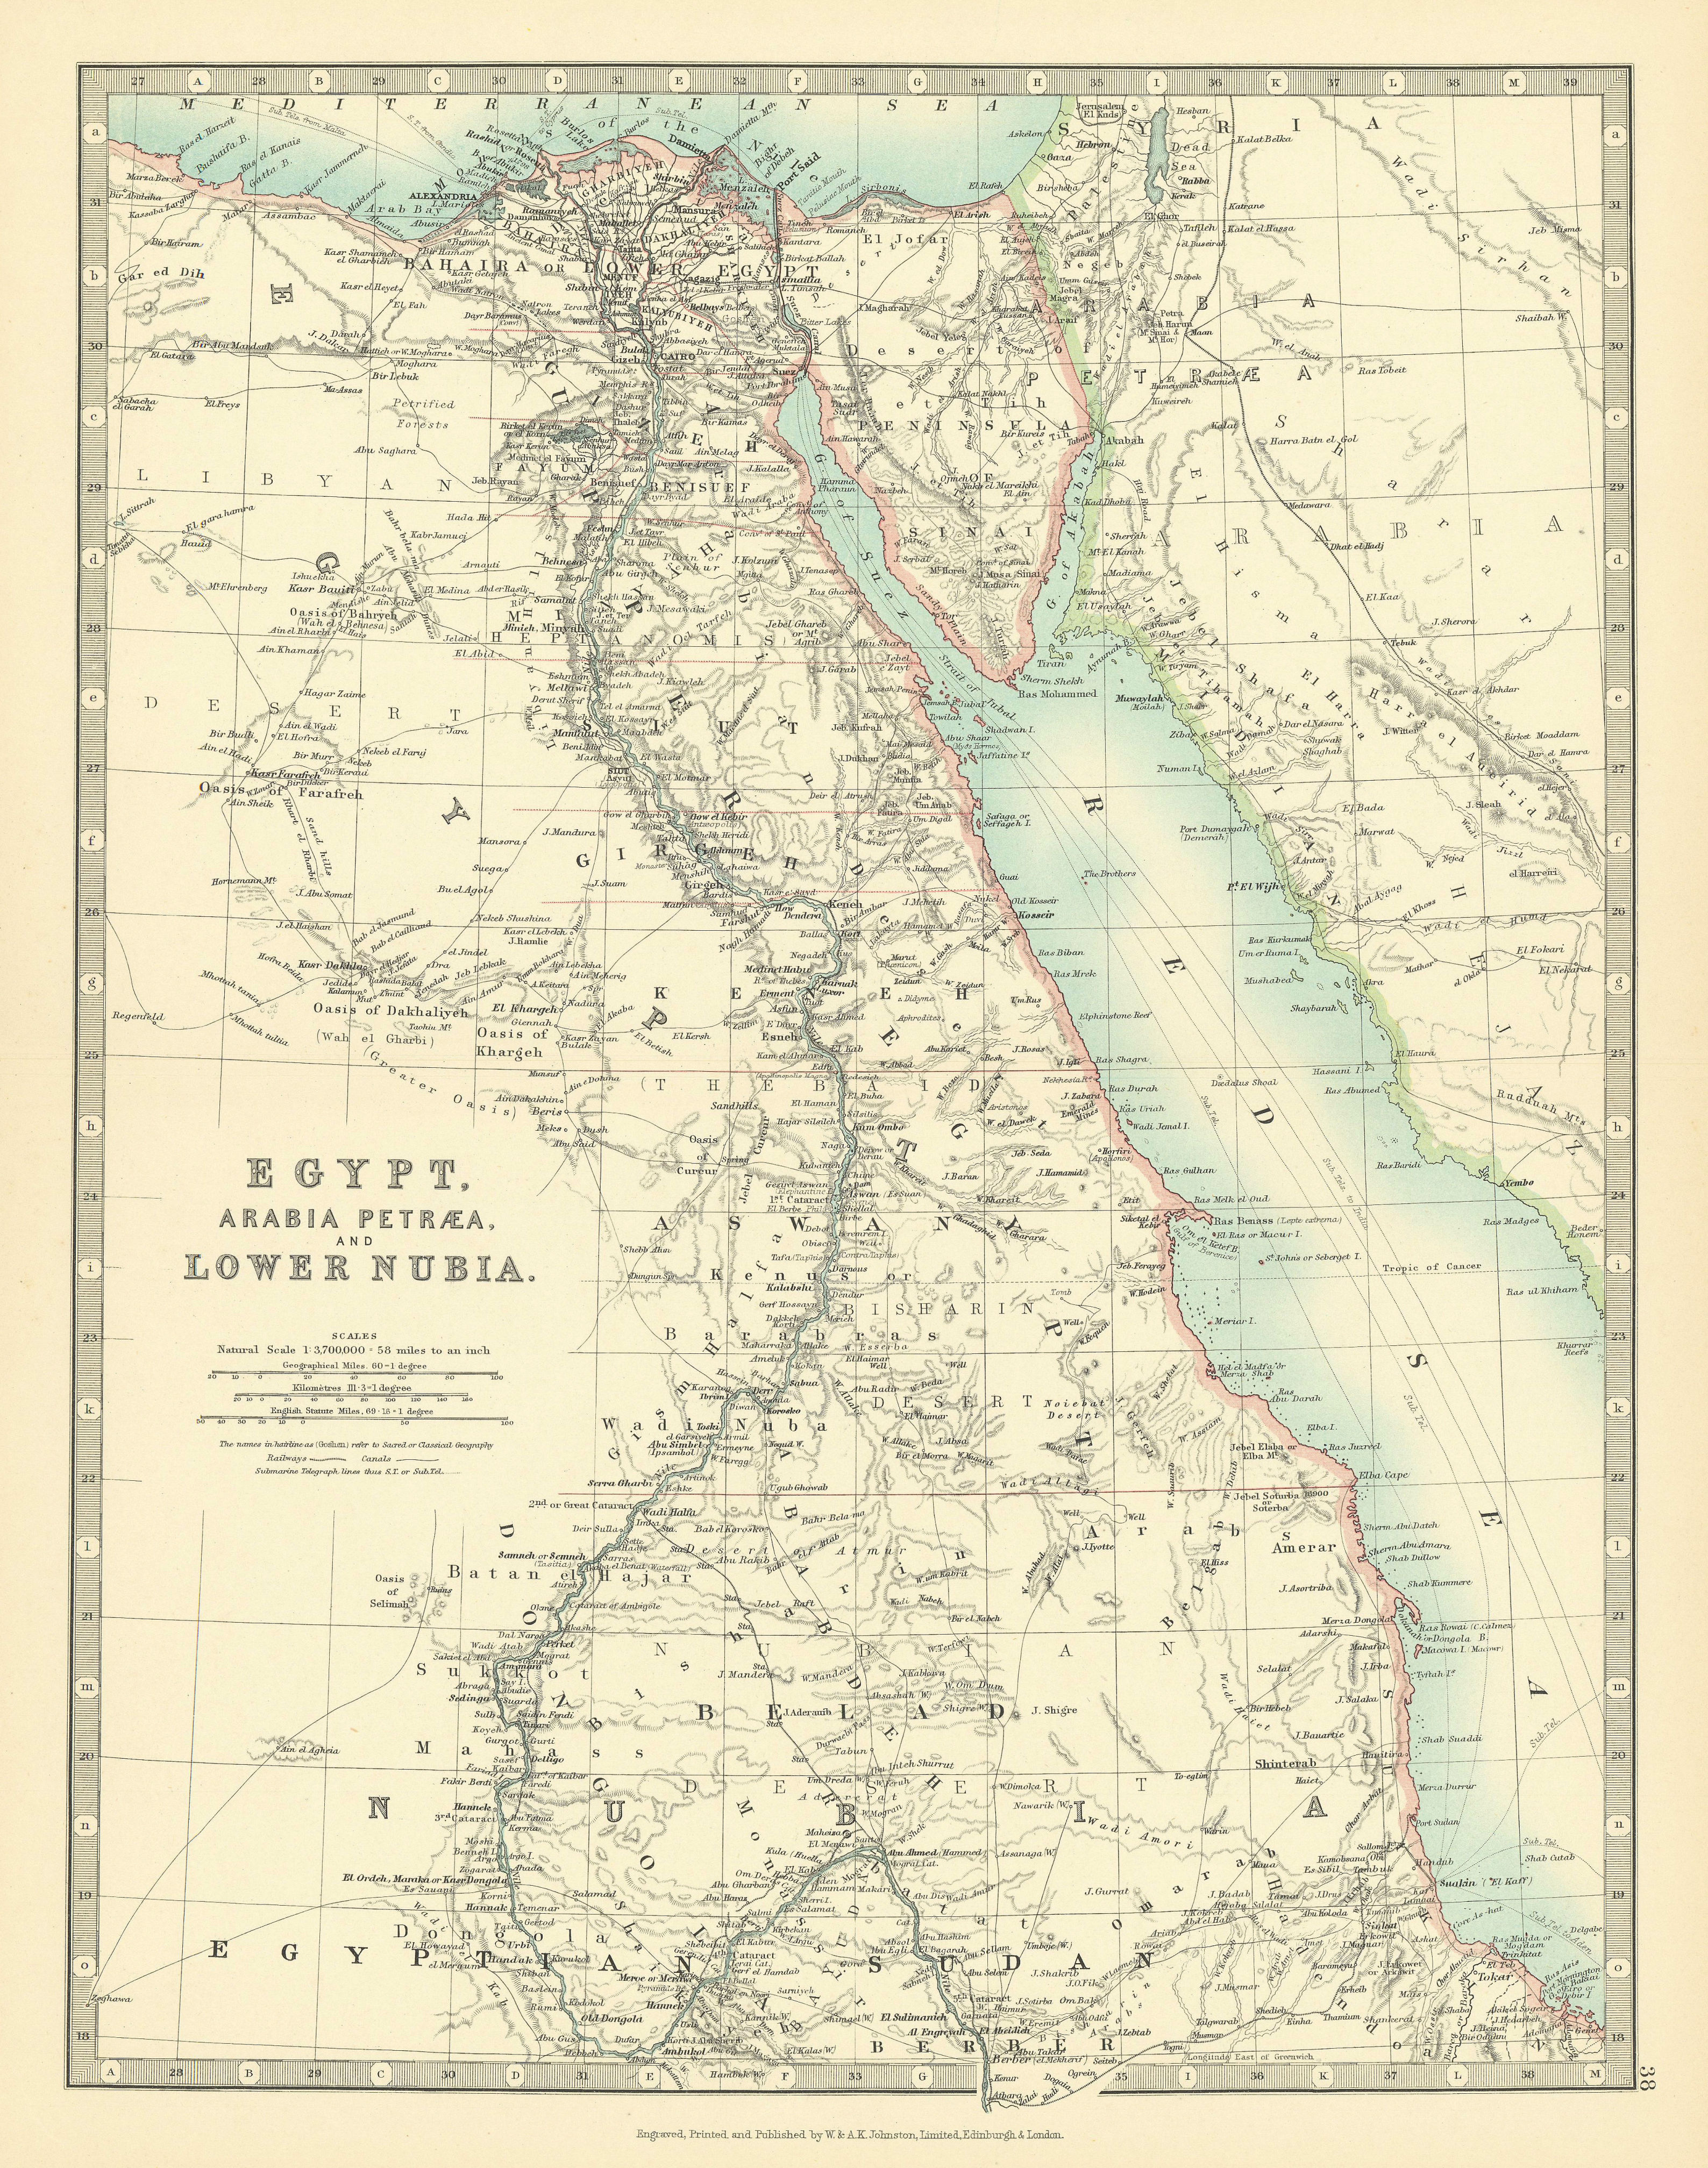 EGYPT ARABIA PETRAEA LOWER NUBIA. Nile Valley Red Sea Sharm El Sheikh 1911 map